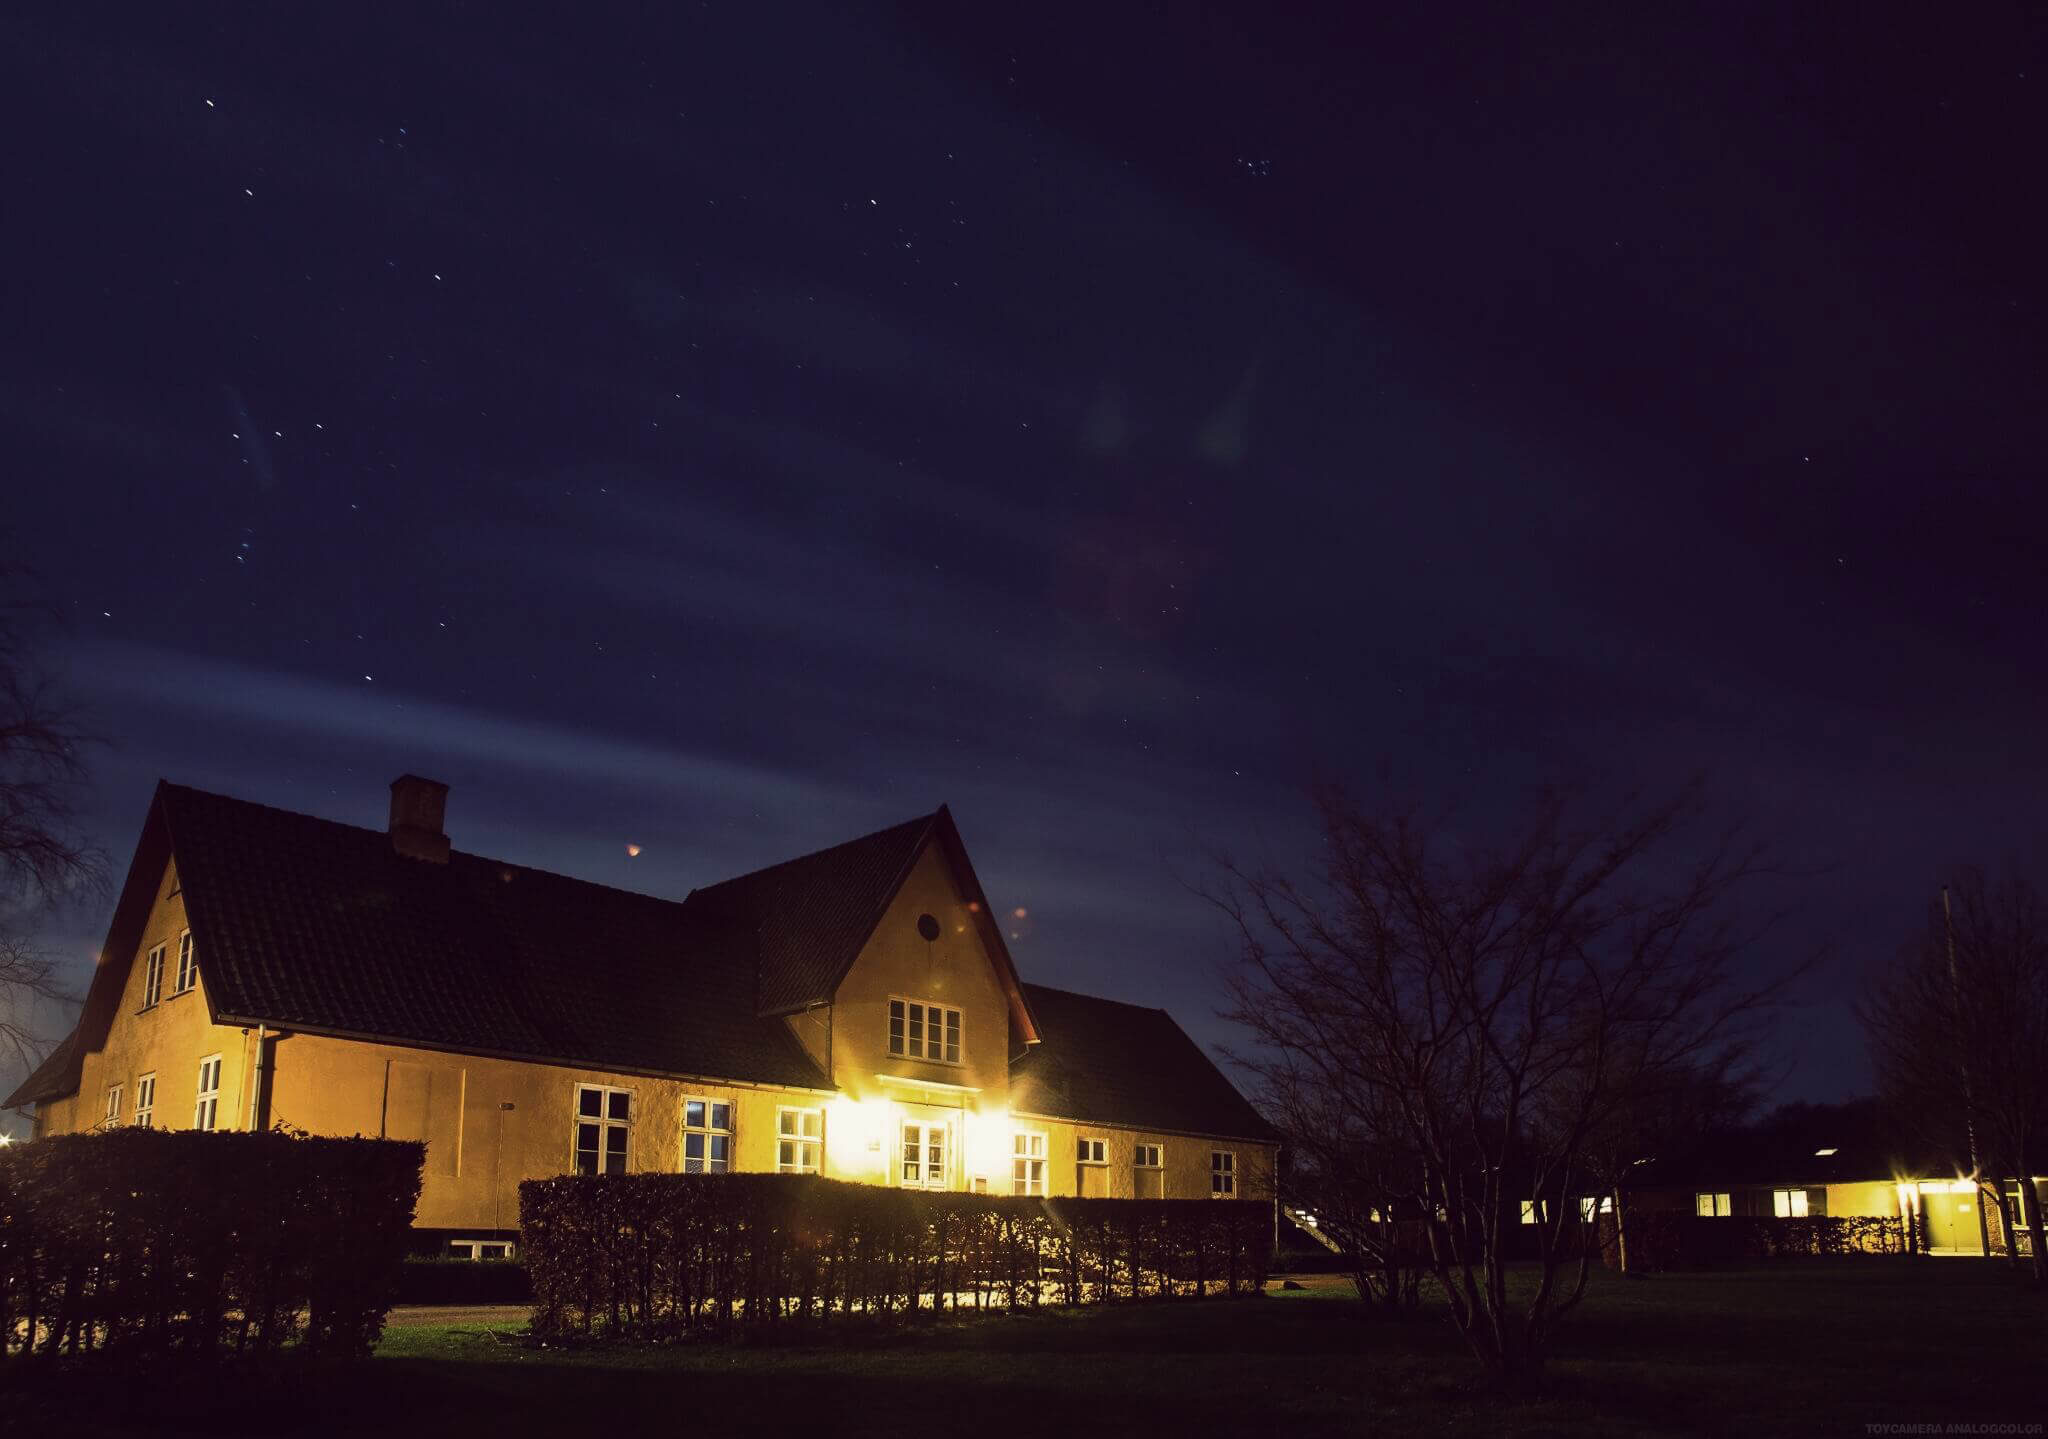 IPC - International People's College facilities at night - a folk high school in Denmark1